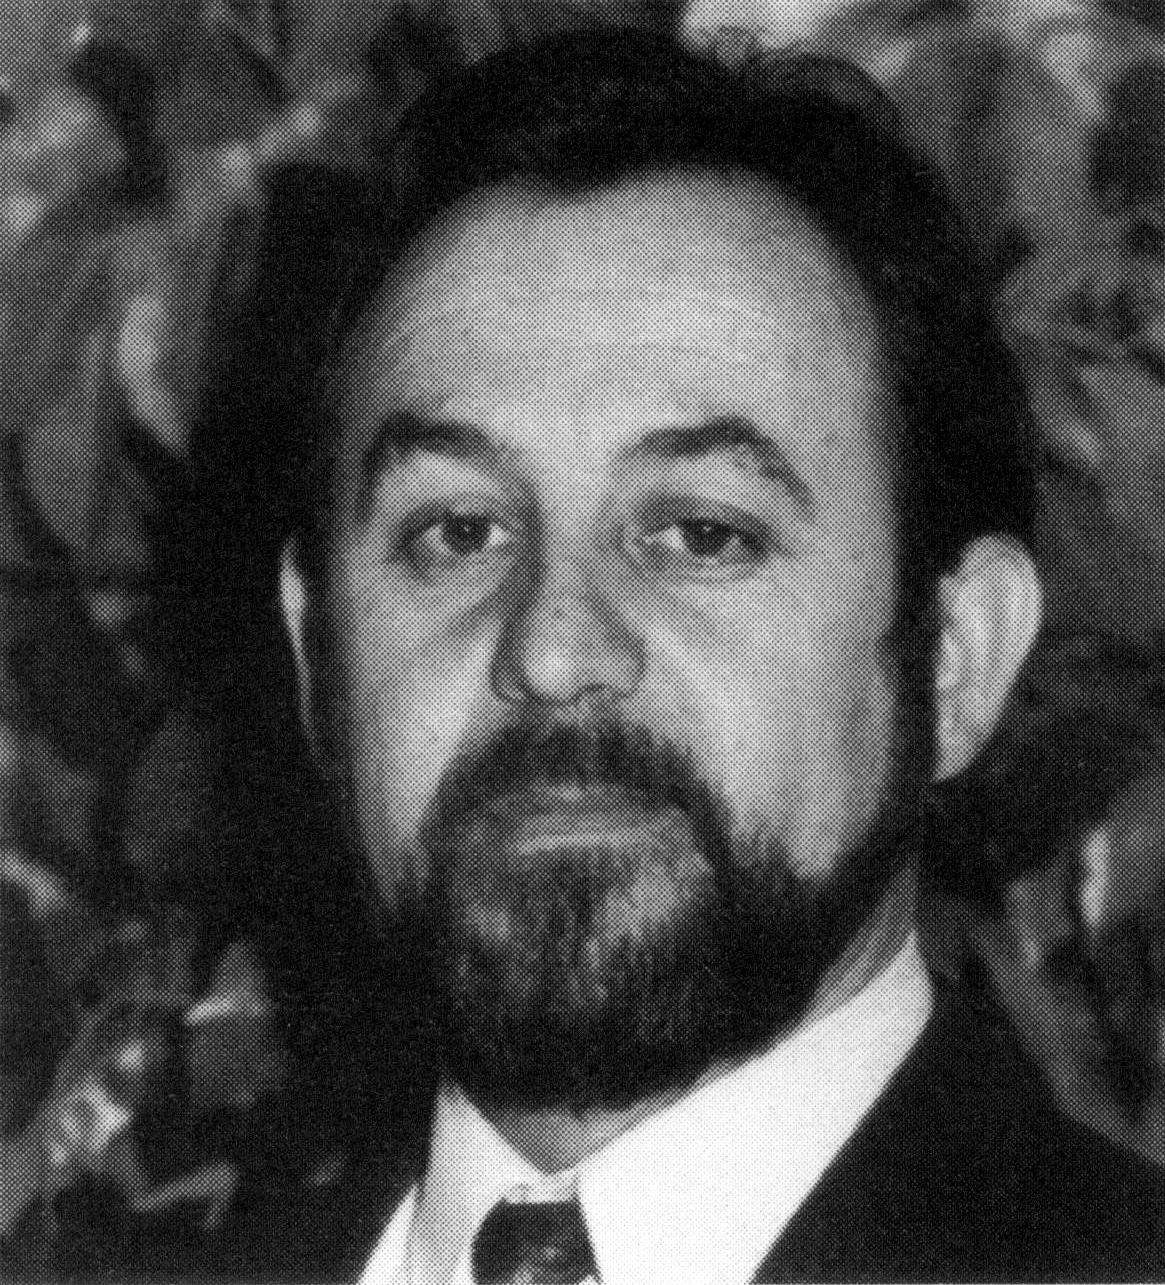 José María Rodríguez Andrés